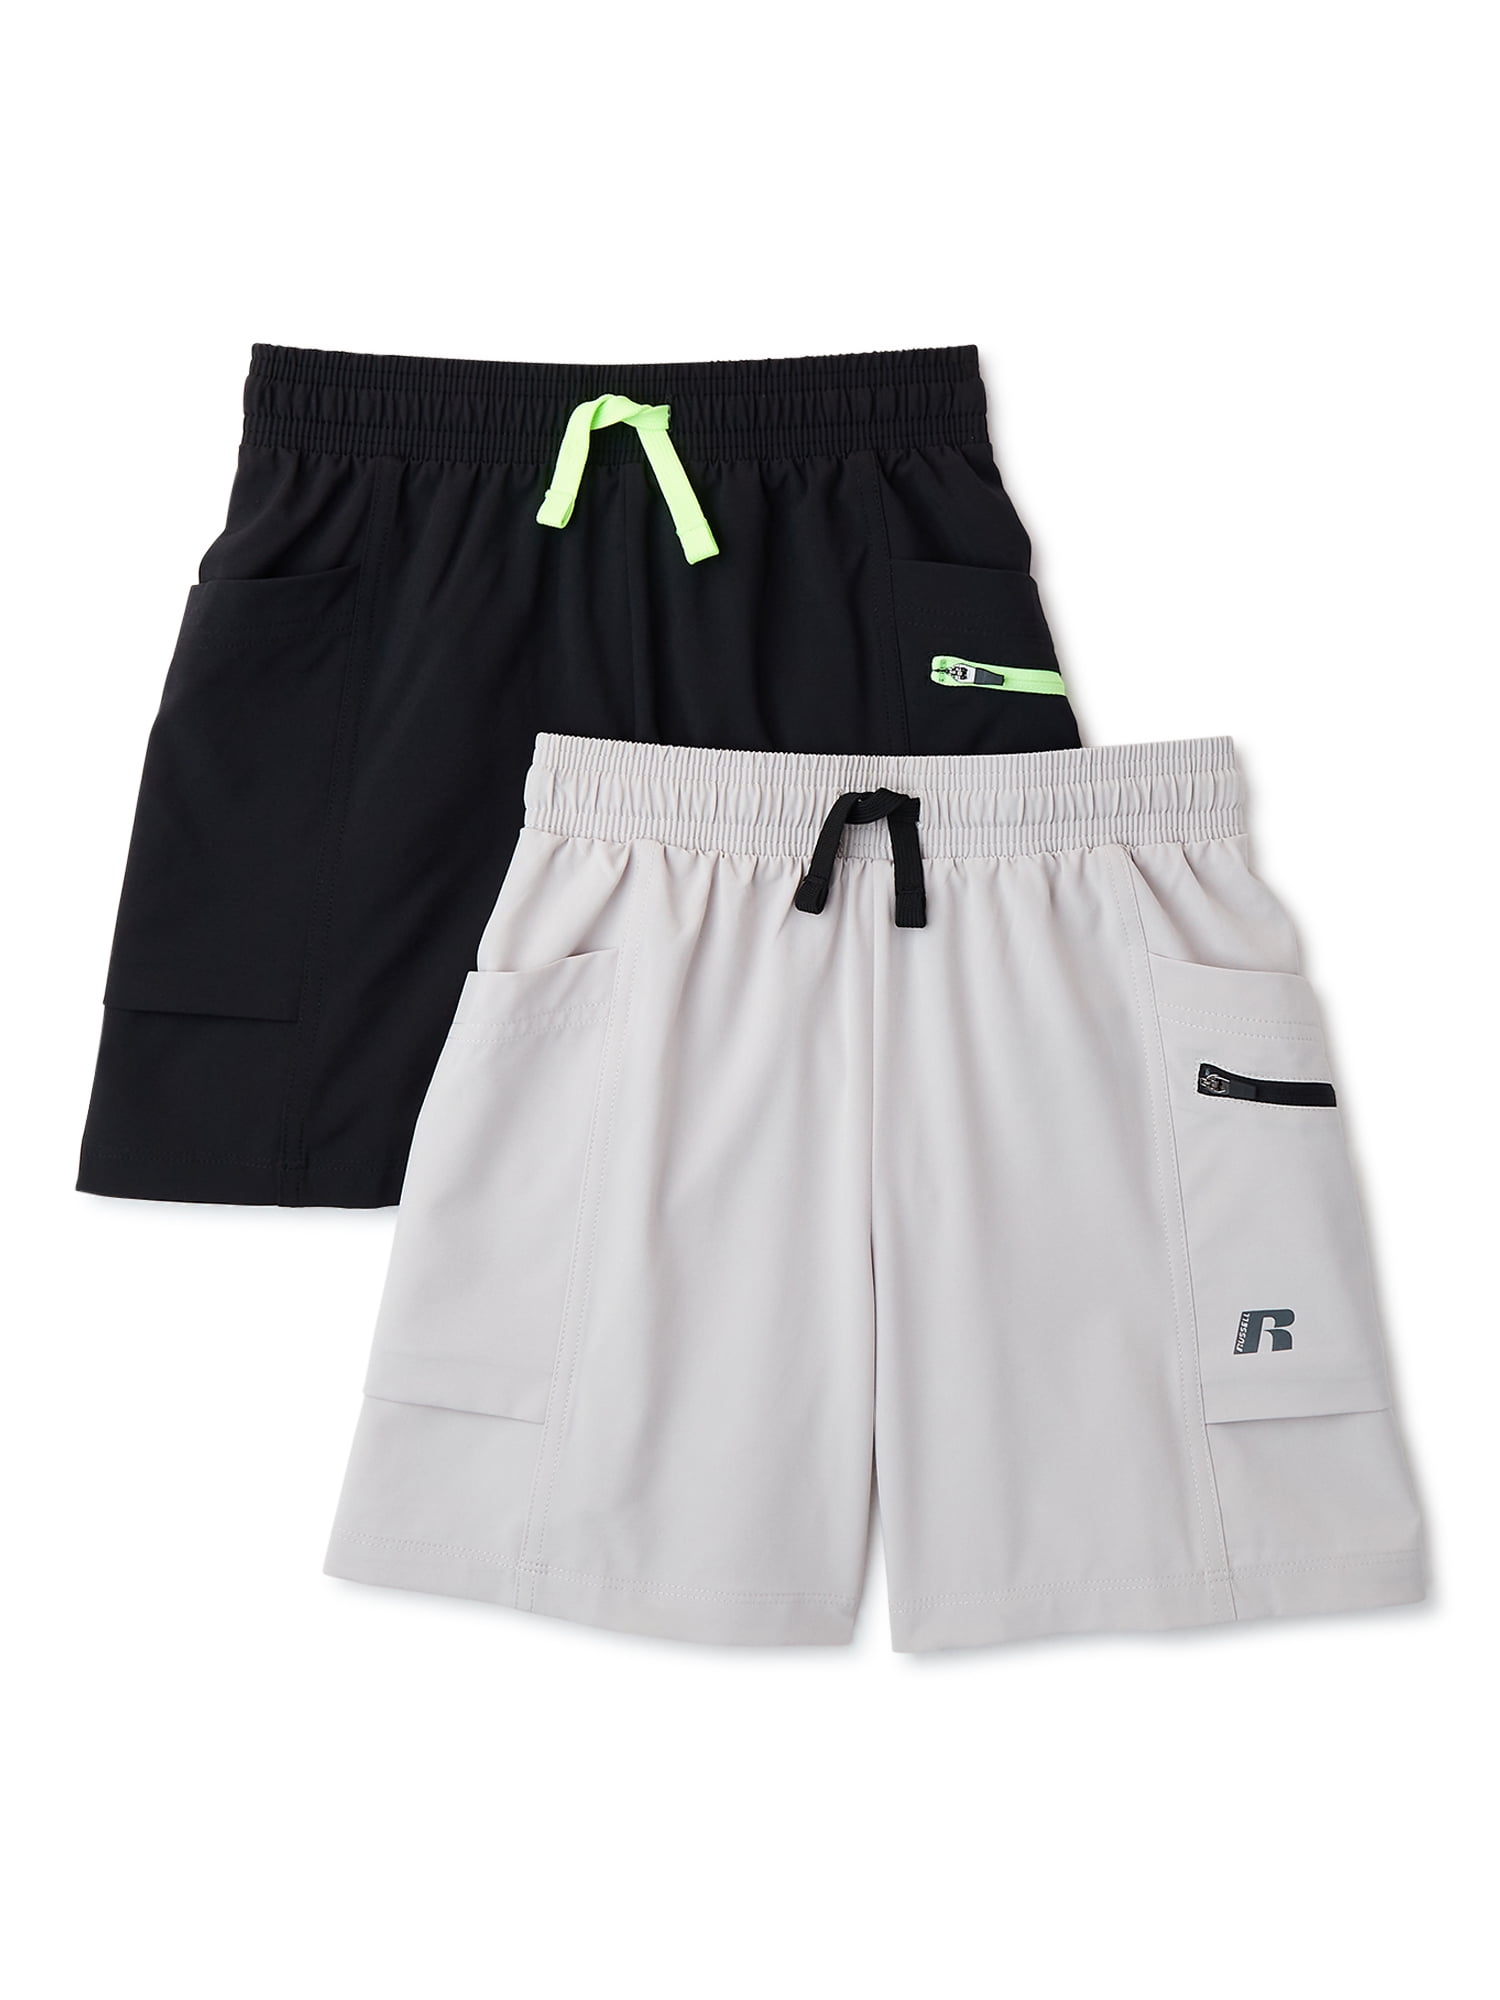 Gray W Orange W Pockets 10-12 Athletic Works Boys Active Mesh Shorts Large 